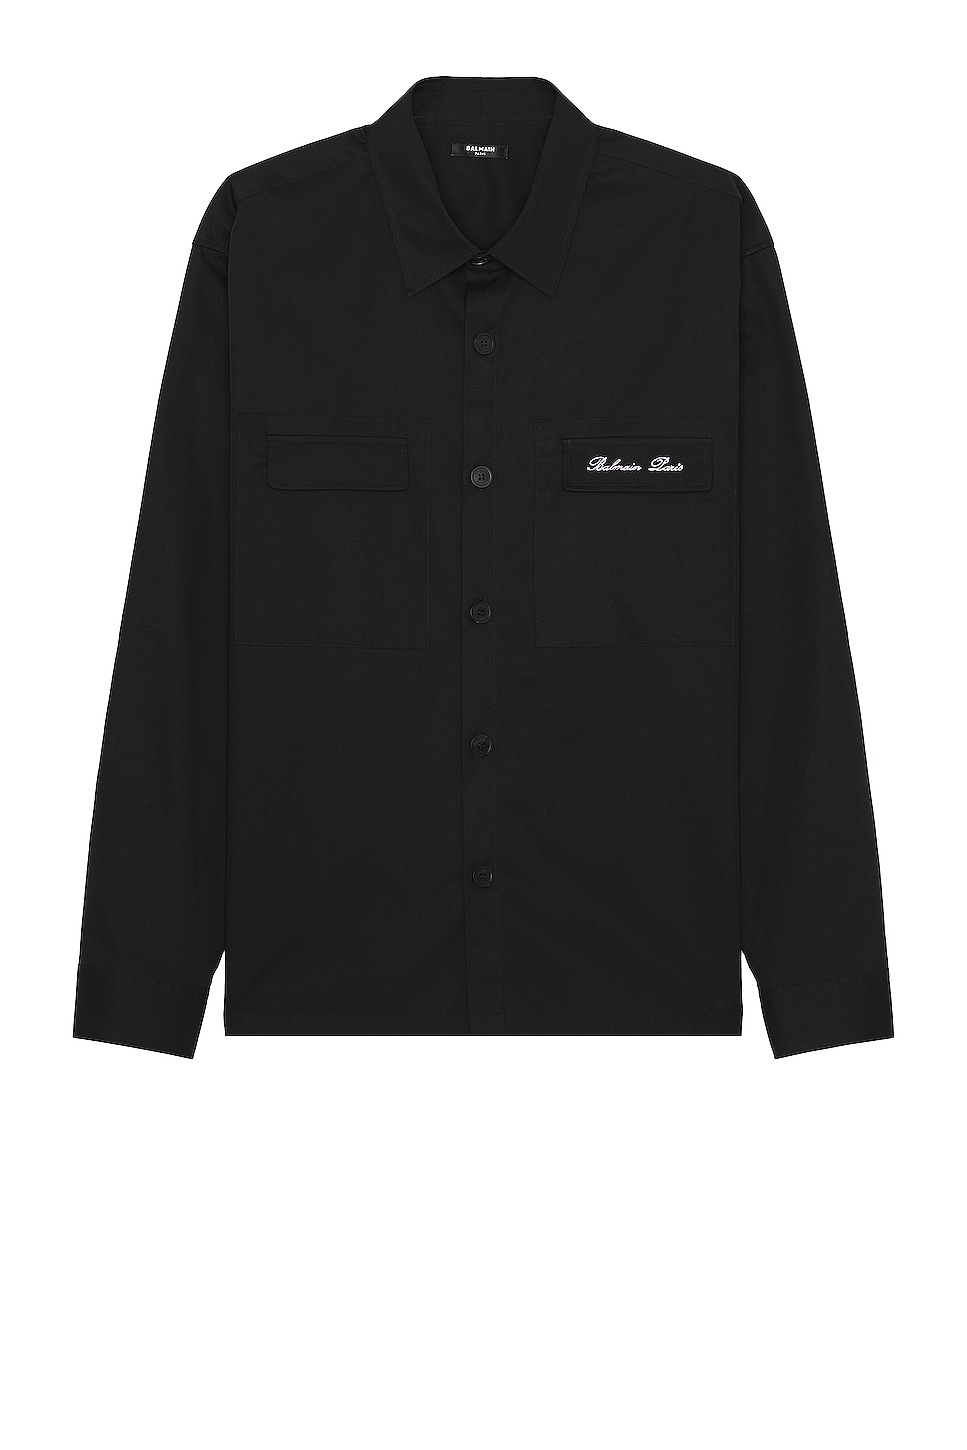 Image 1 of BALMAIN Signature Cotton Overshirt in Black